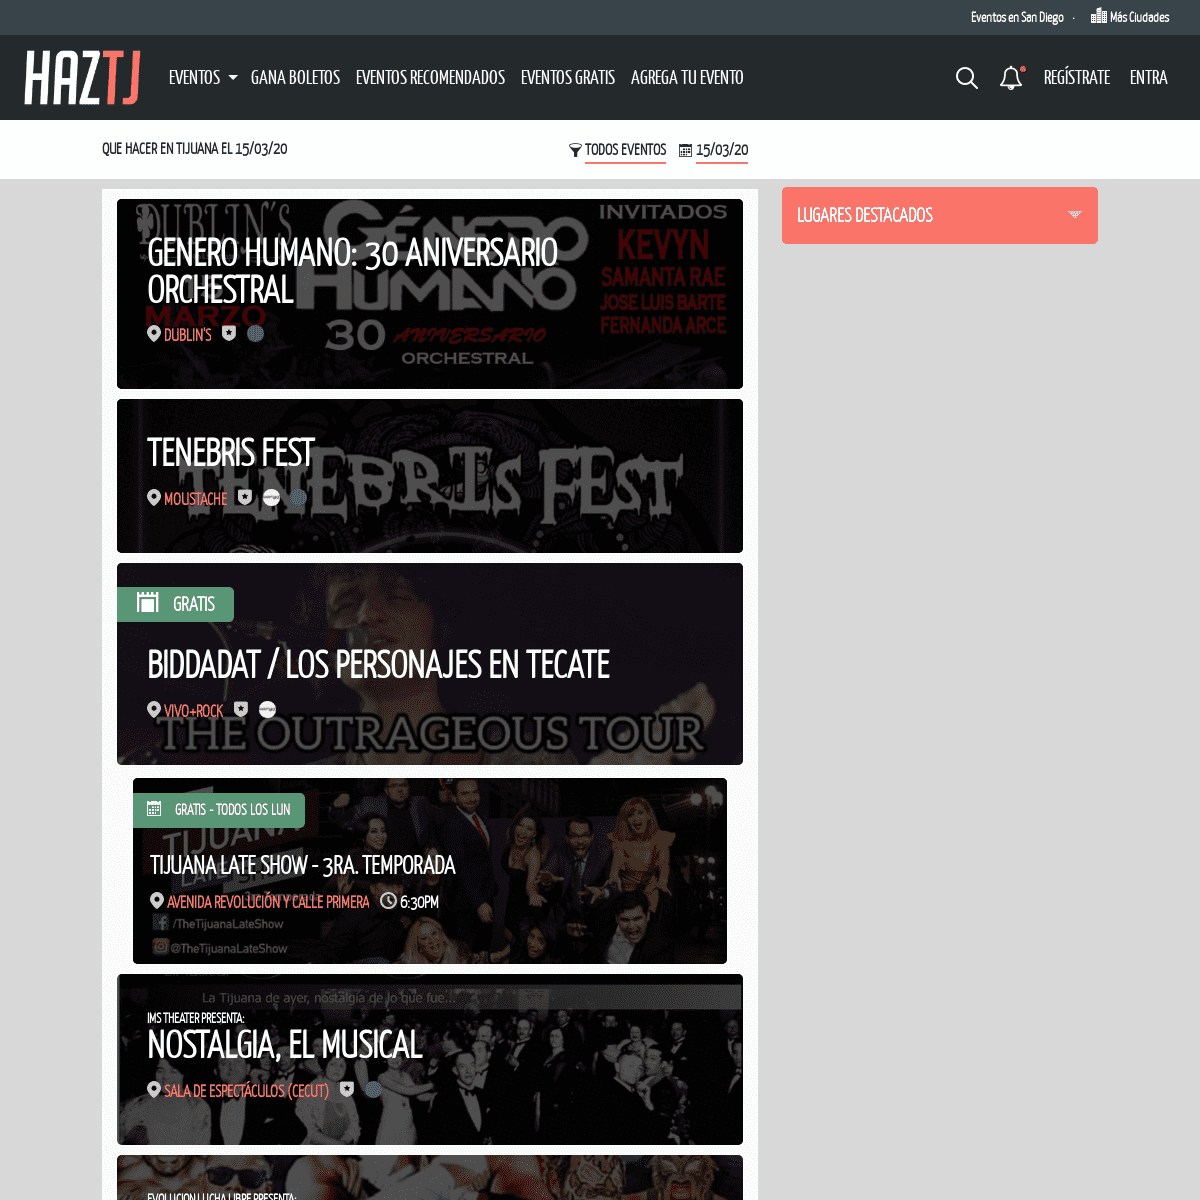 A complete backup of haztj.com